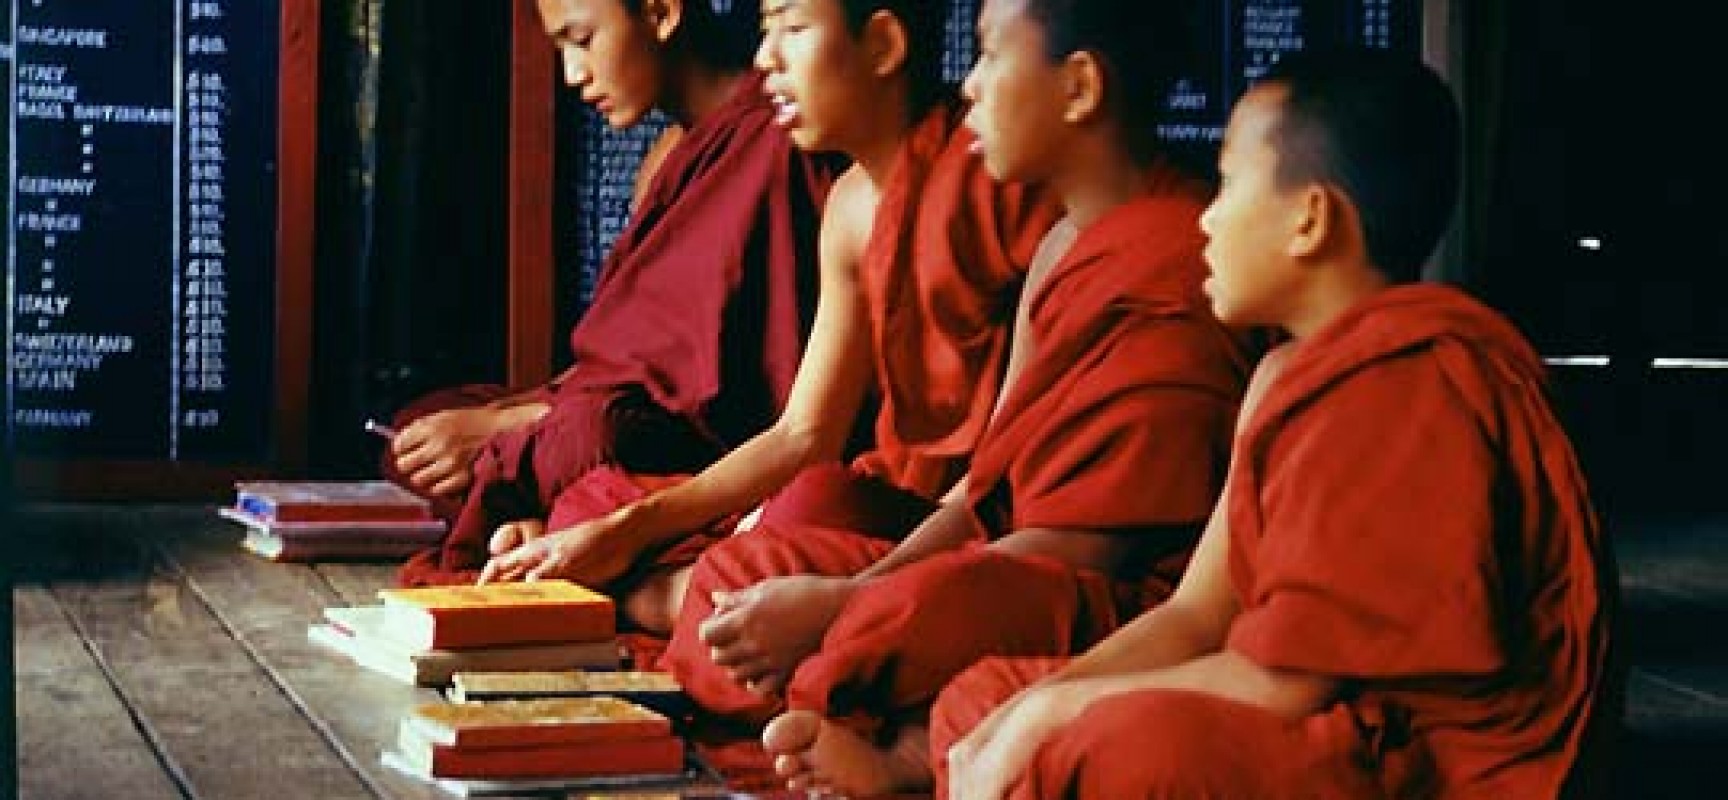 Karma – A Buddhist